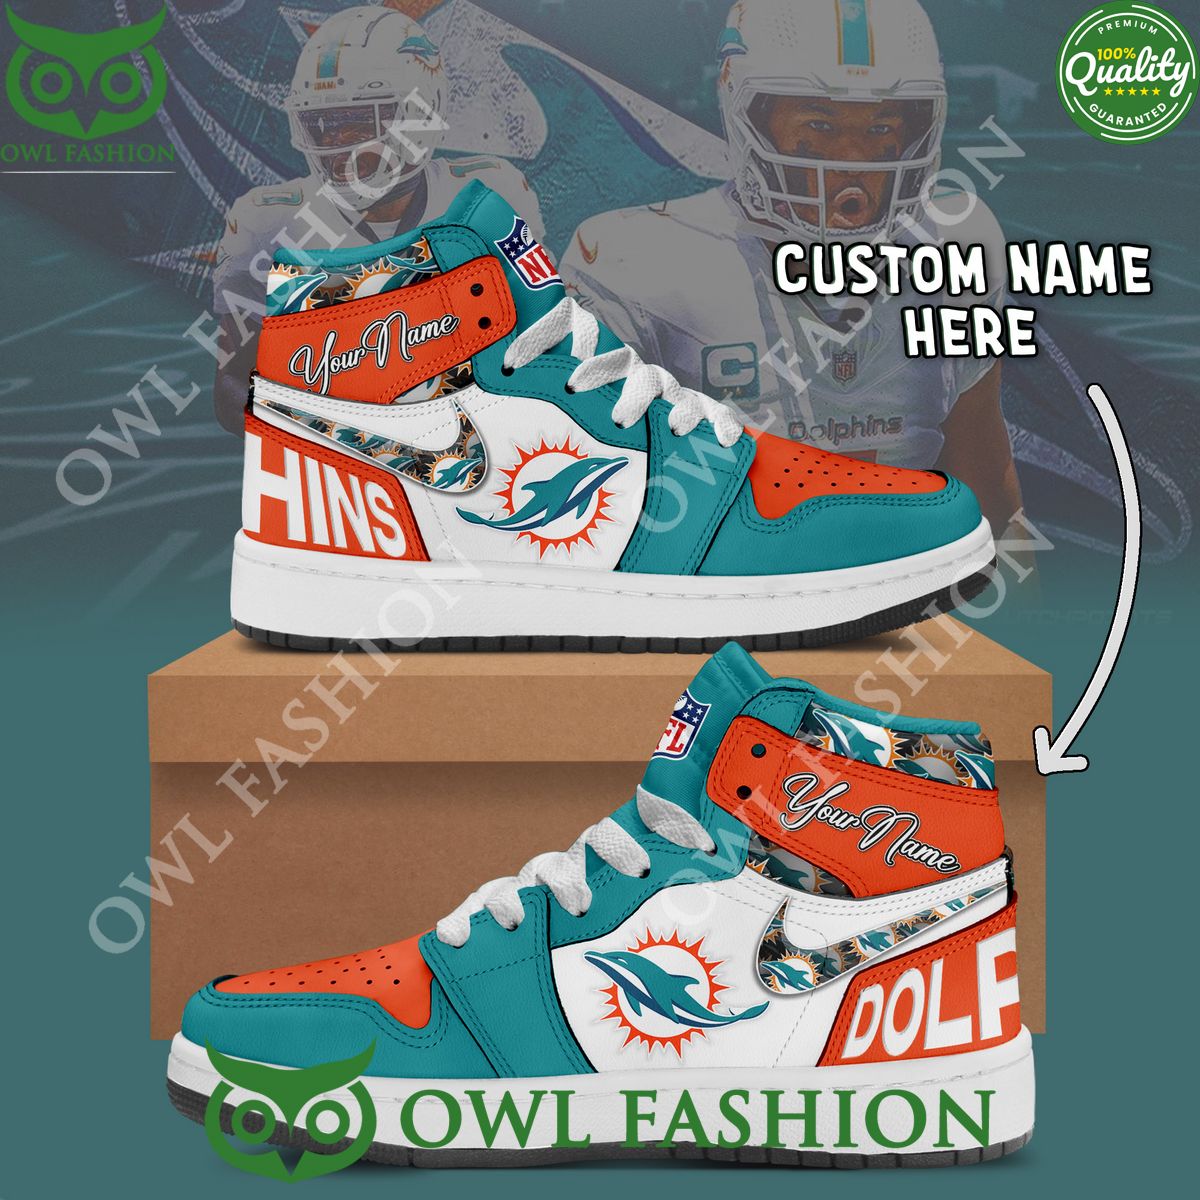 Miami Dolphins Fashion Trending NFL AJ1 Air Jordan Sneakers Custom Name